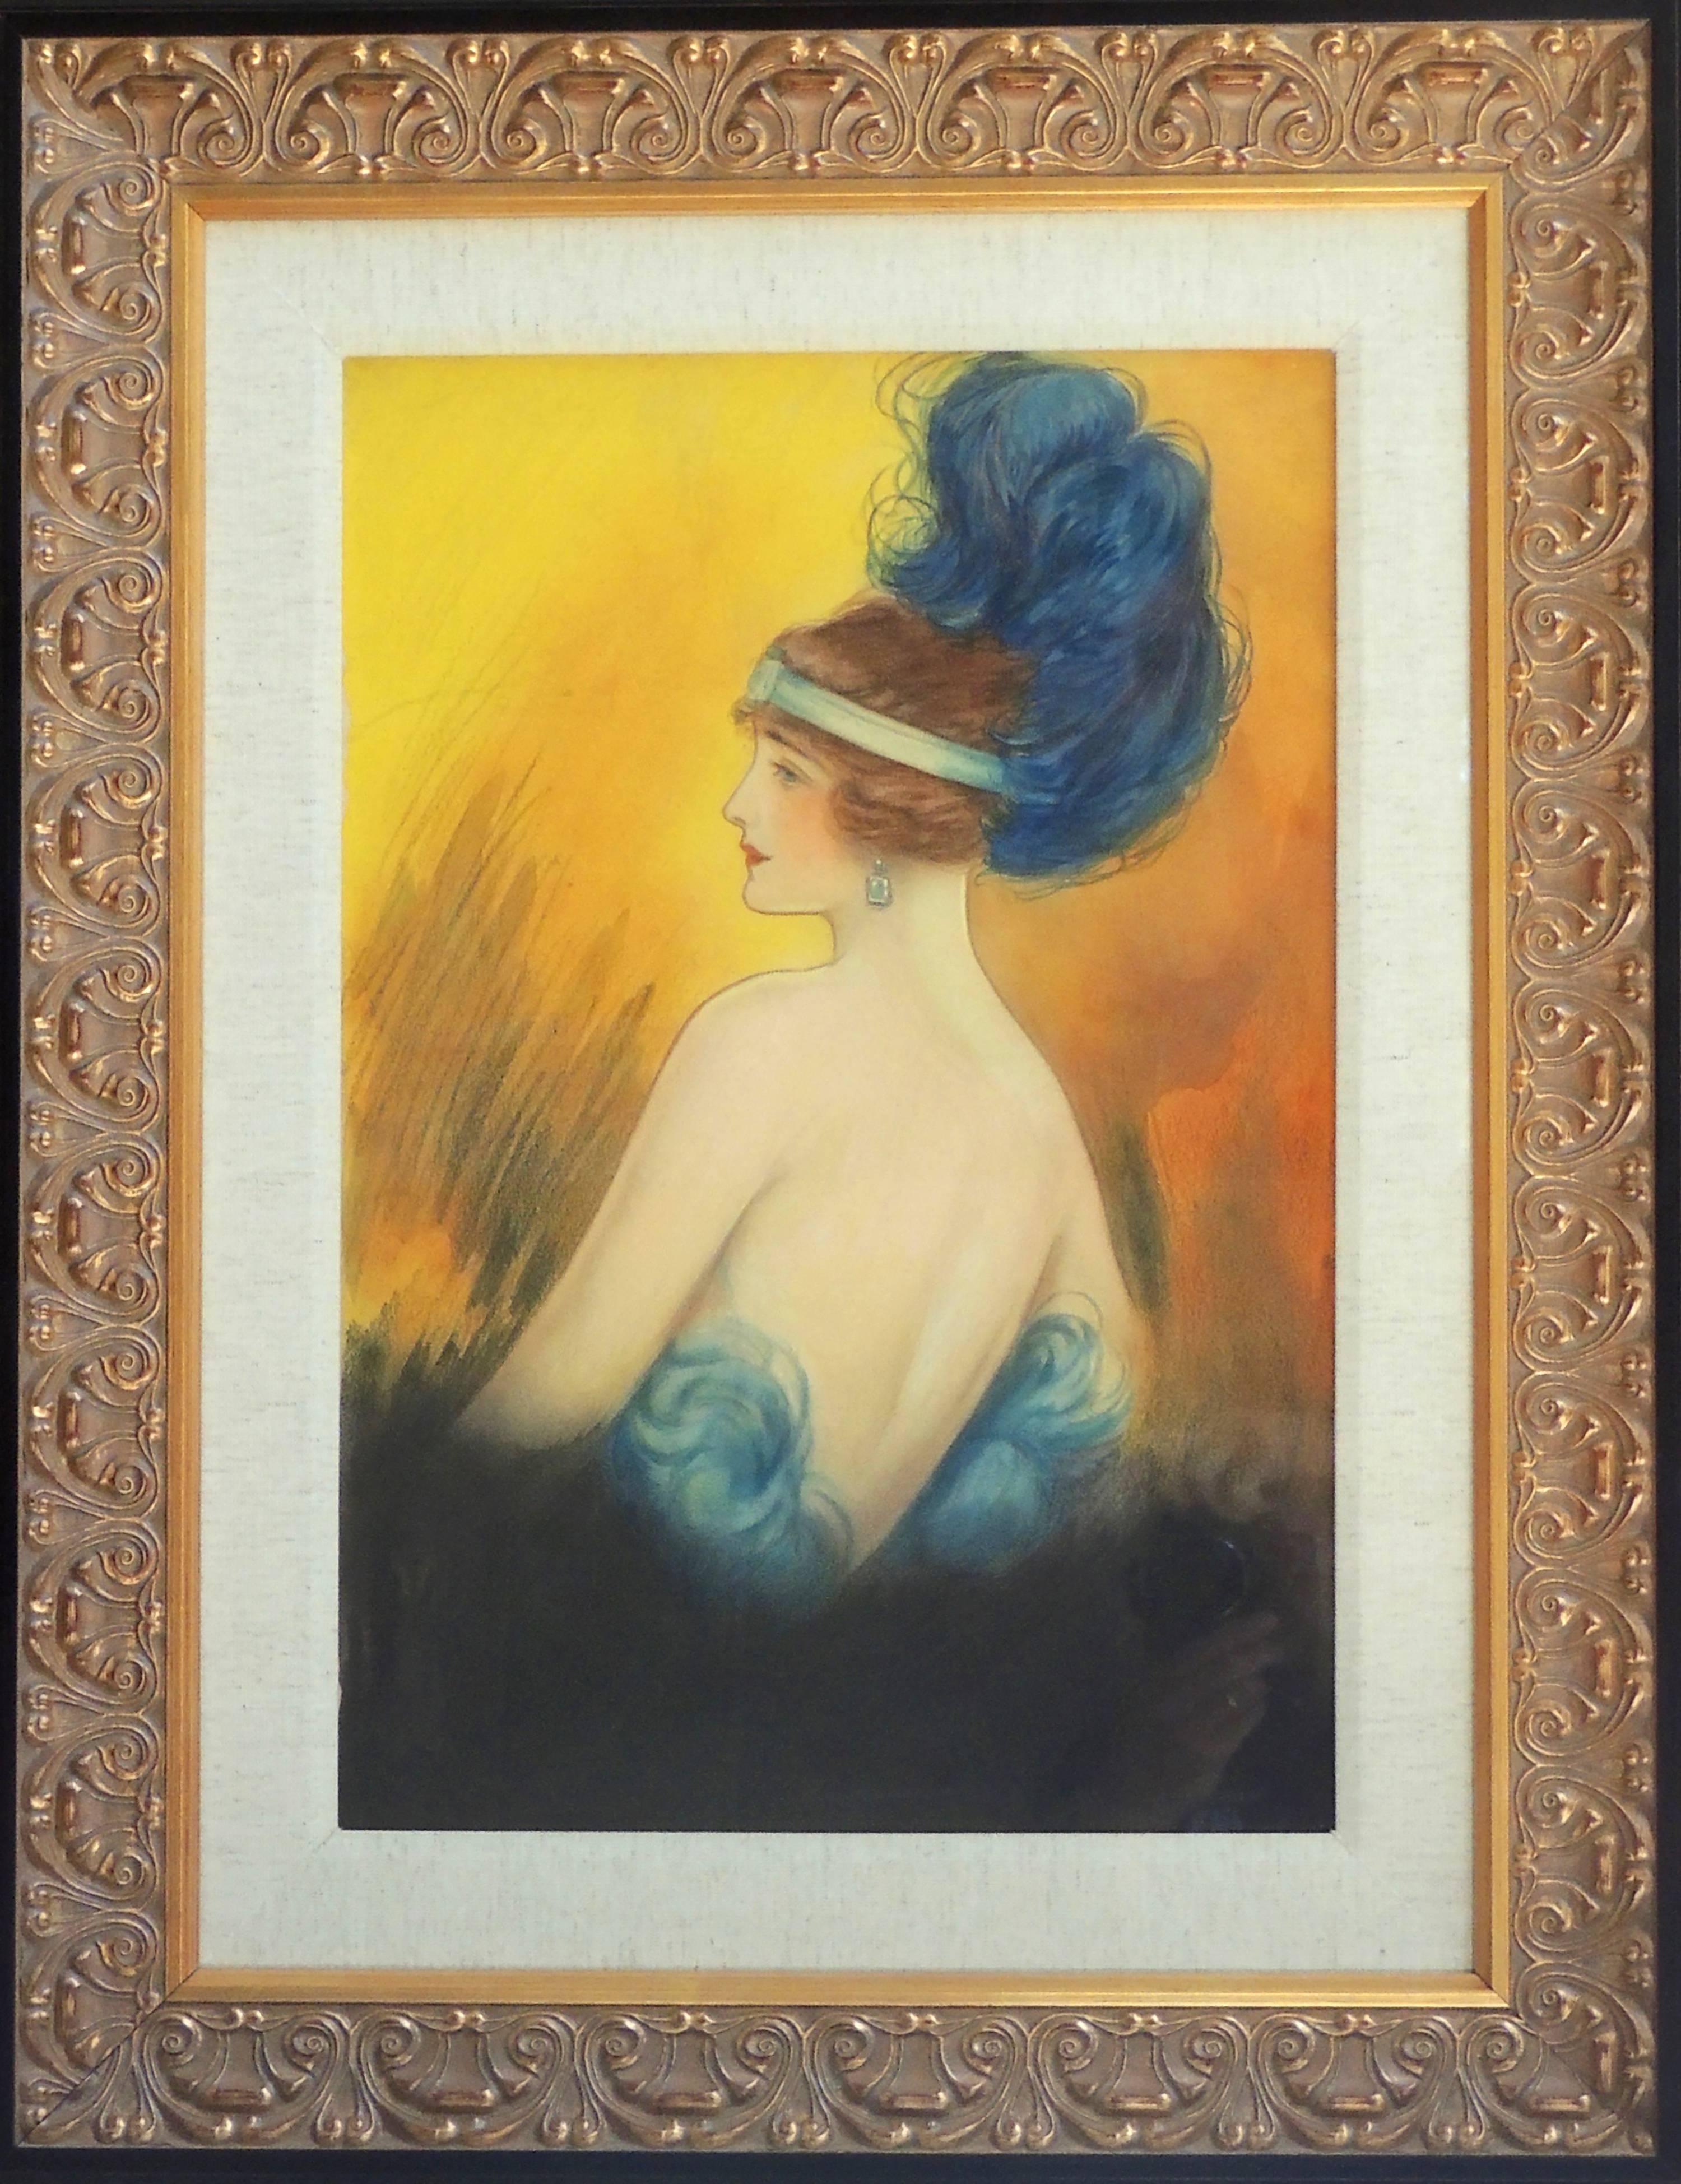 Flapper Era Woman with Feathered Headdress - Art by Clara Peck